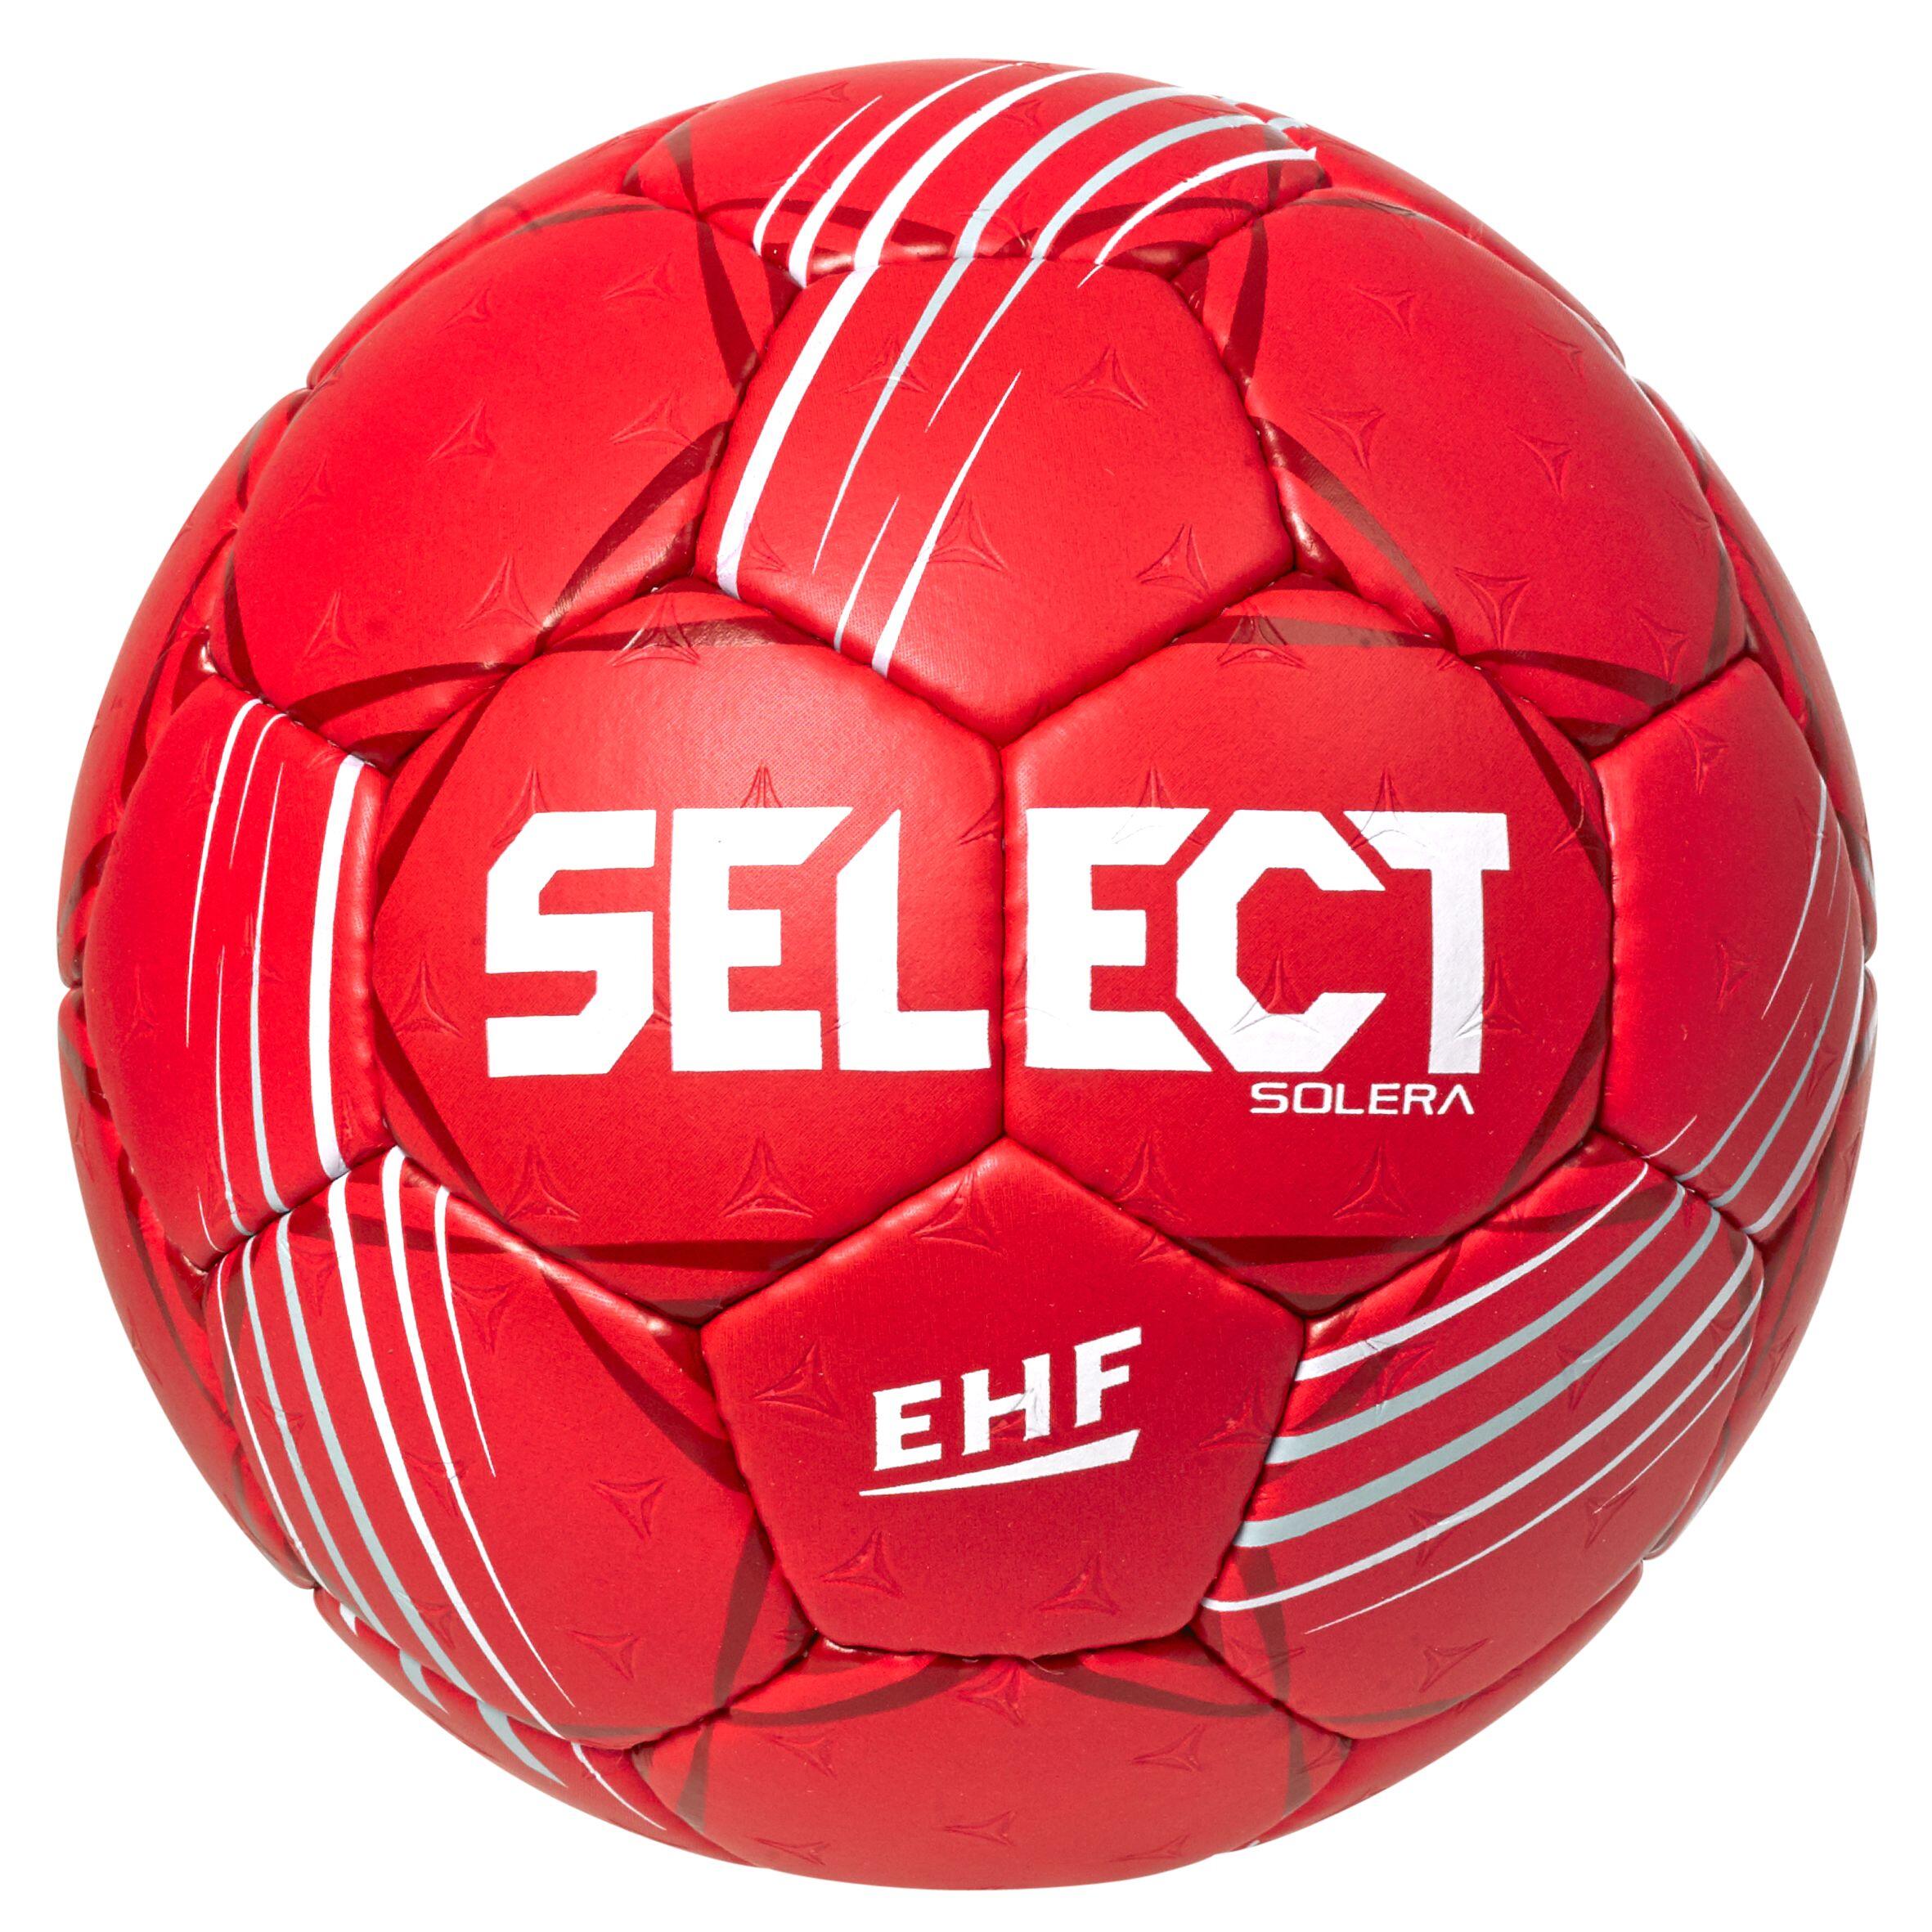 Minge handbal Select Solera Mărimea 2 Roșu